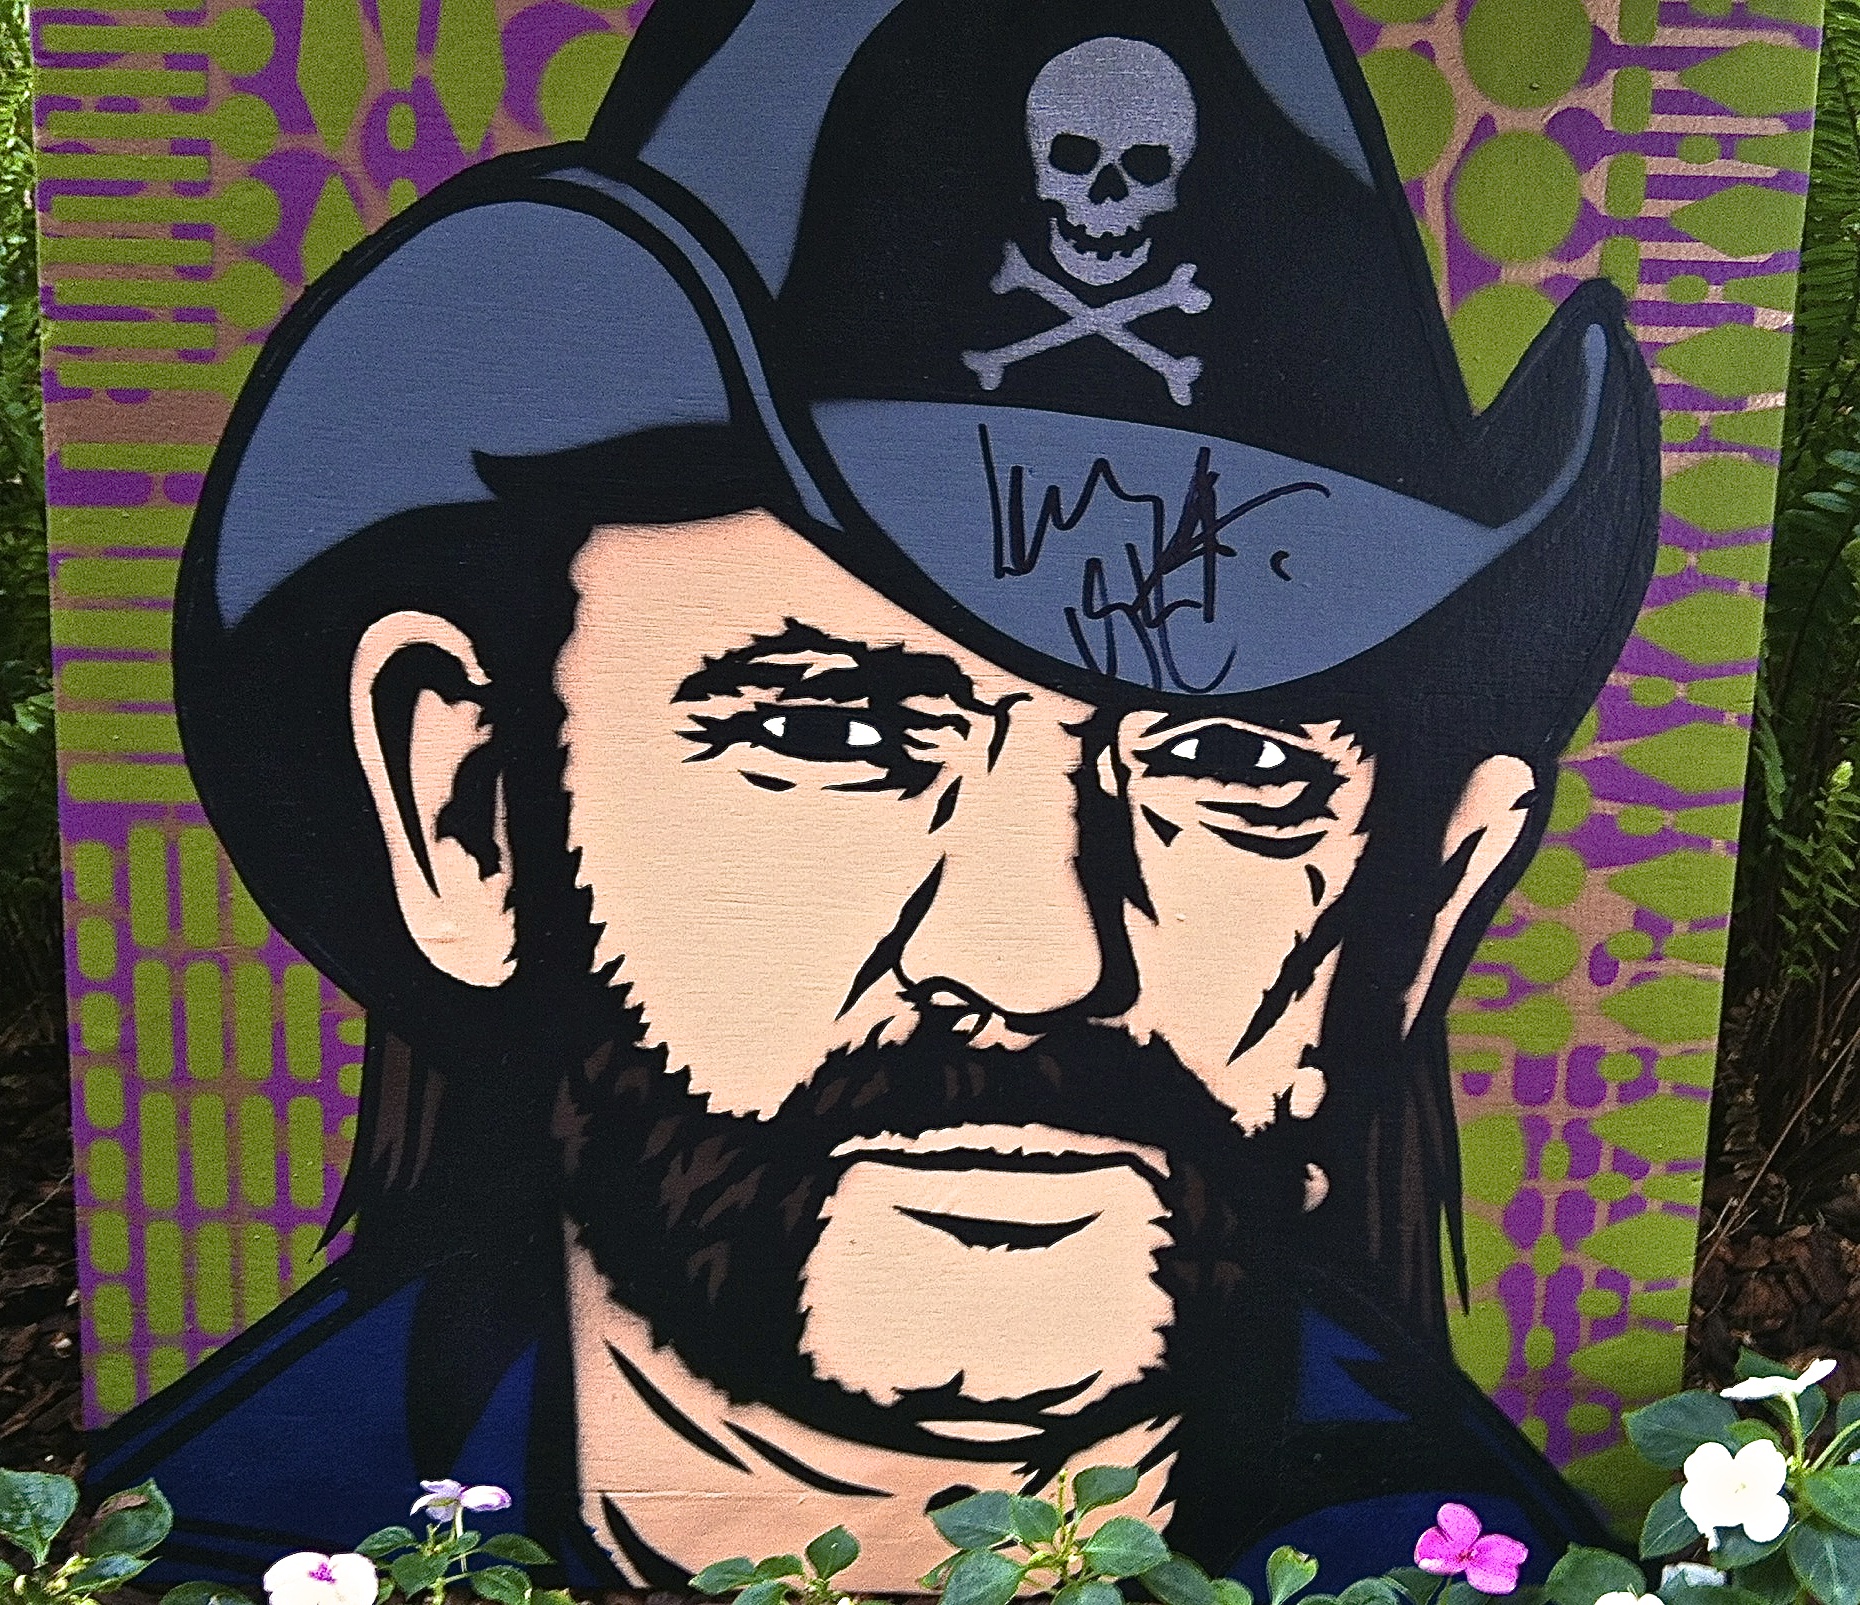 "Lemmy" stencil painting, signed by Lemmy Kilmister (Motorhead)